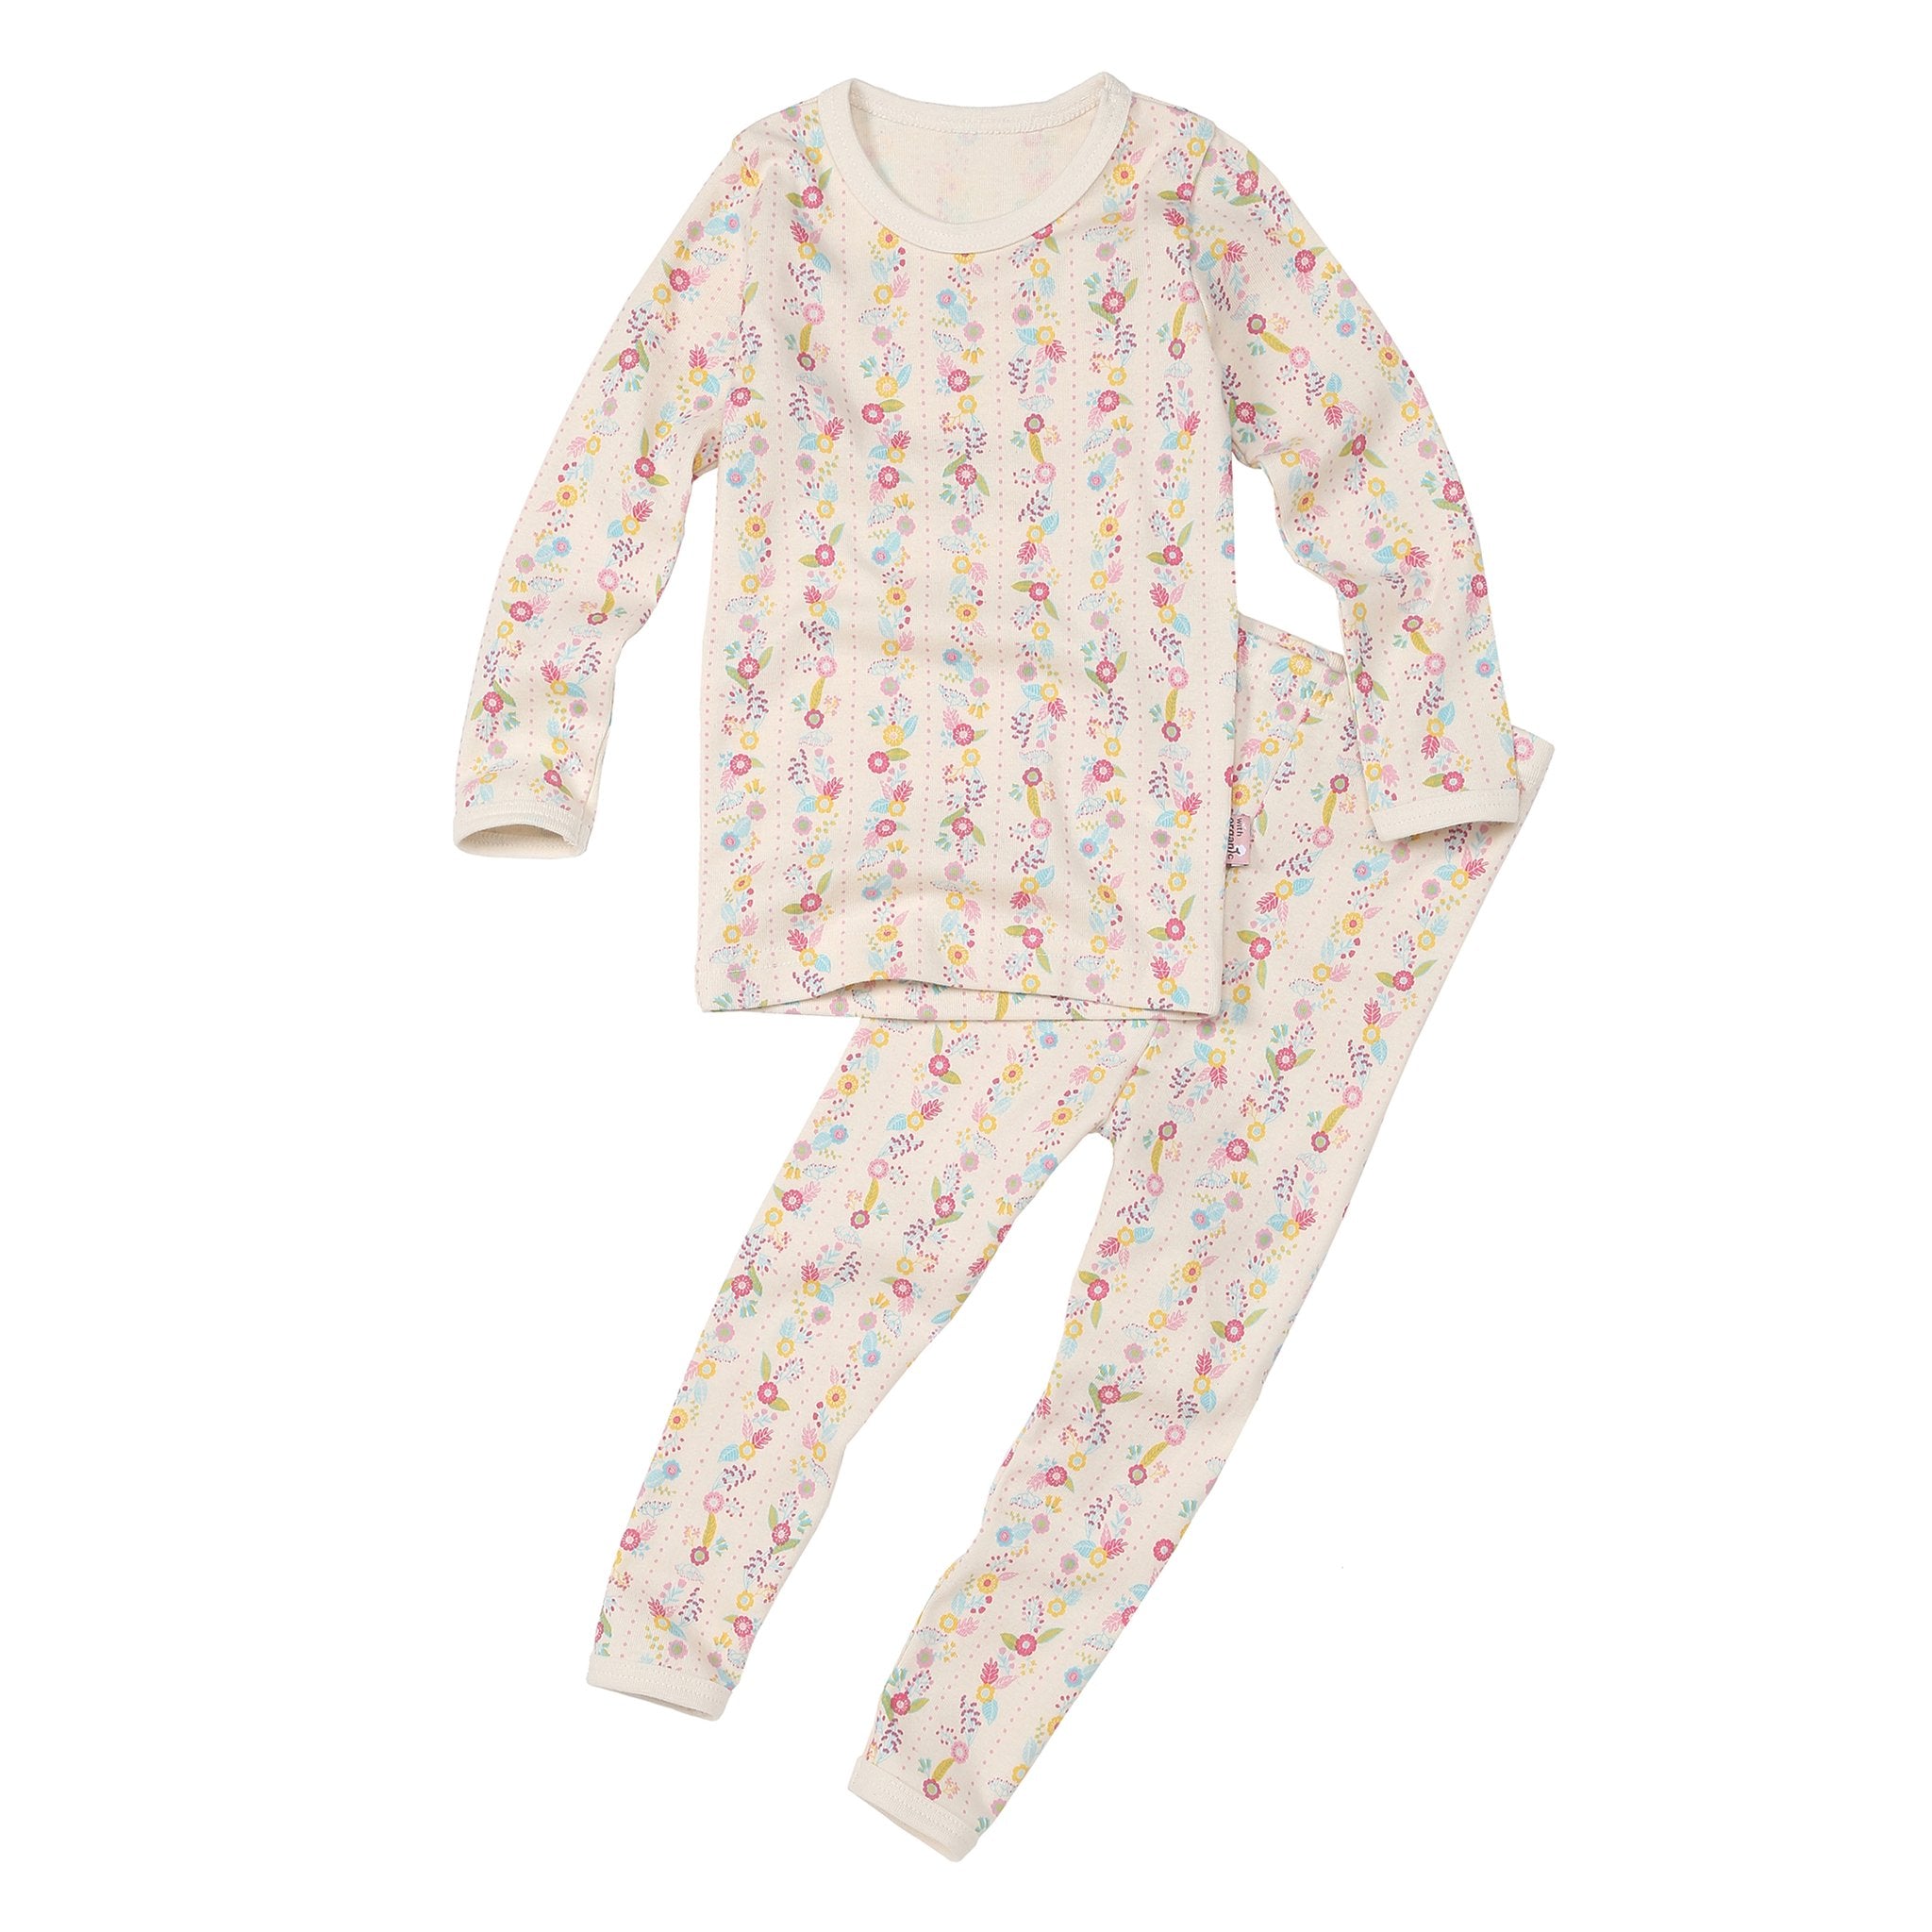 Kids Pajama and Matching Doll Set - Pink Flower